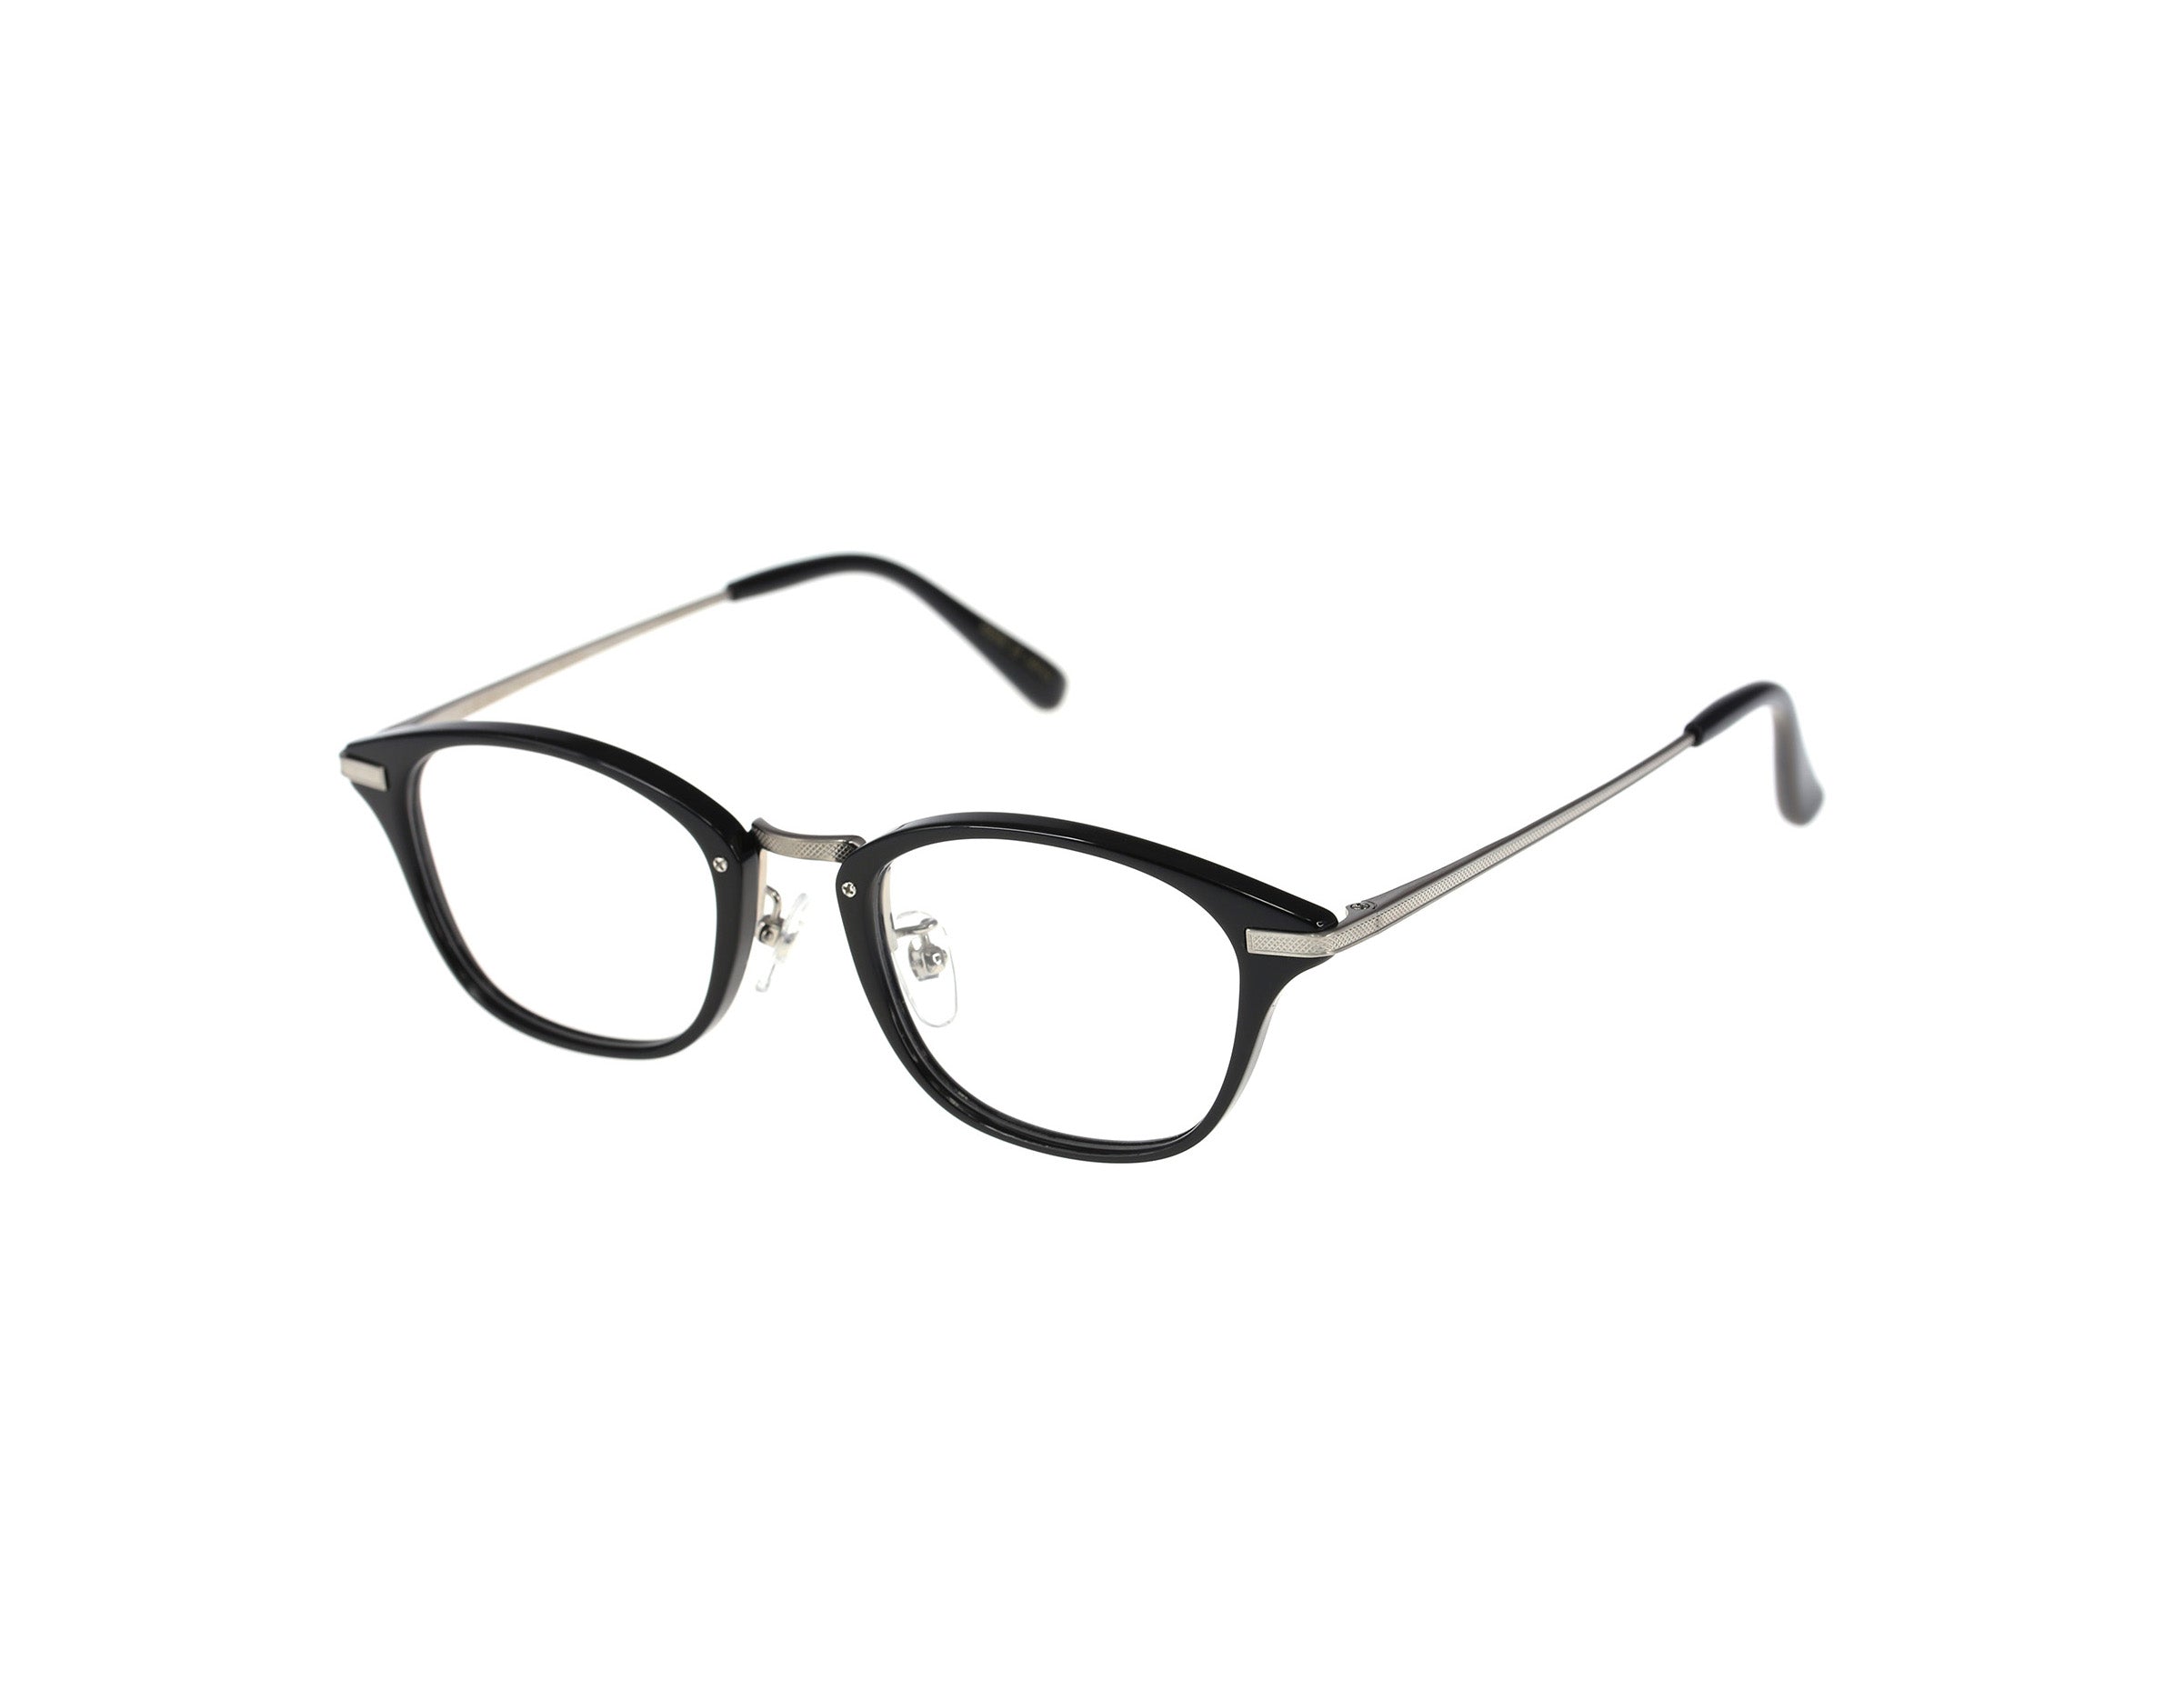 Oh My Glasses - Philip omg-054-1